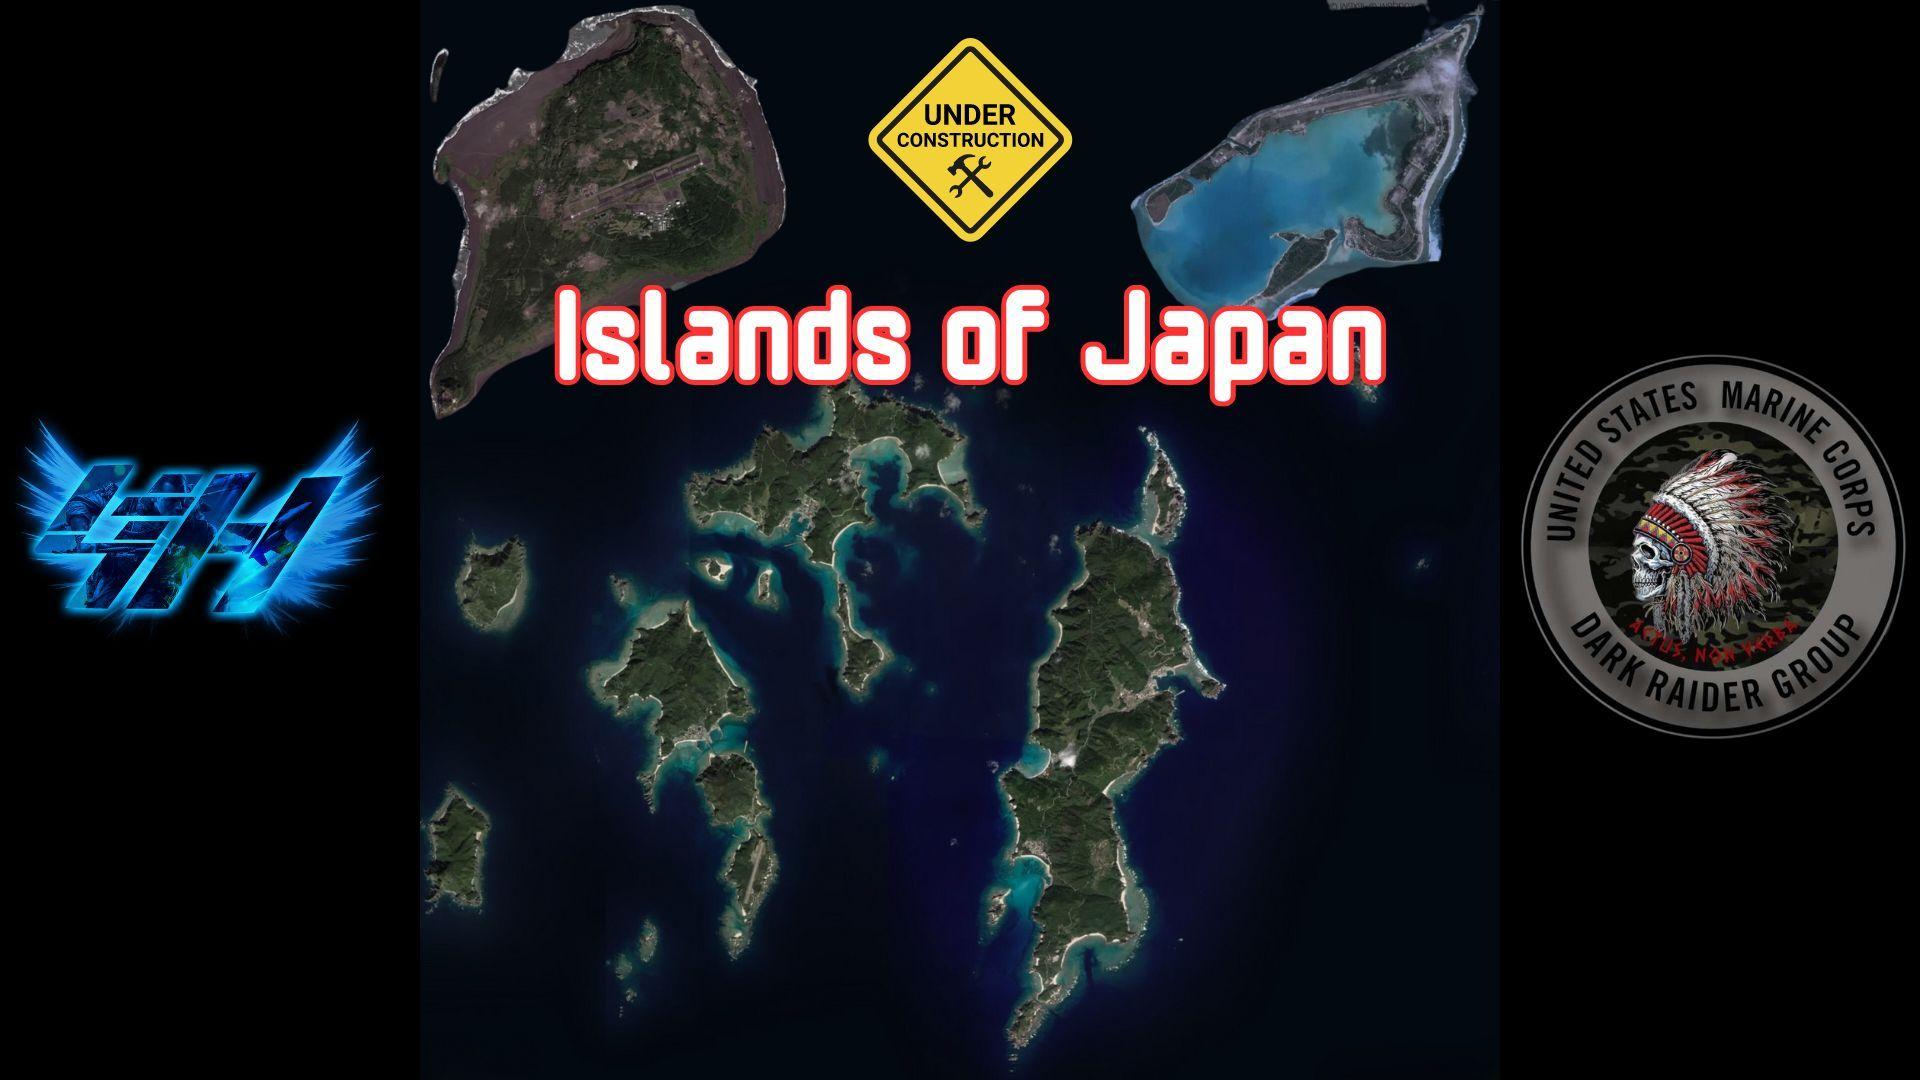 ISLANDS OF JAPAN BY DG 4MMR